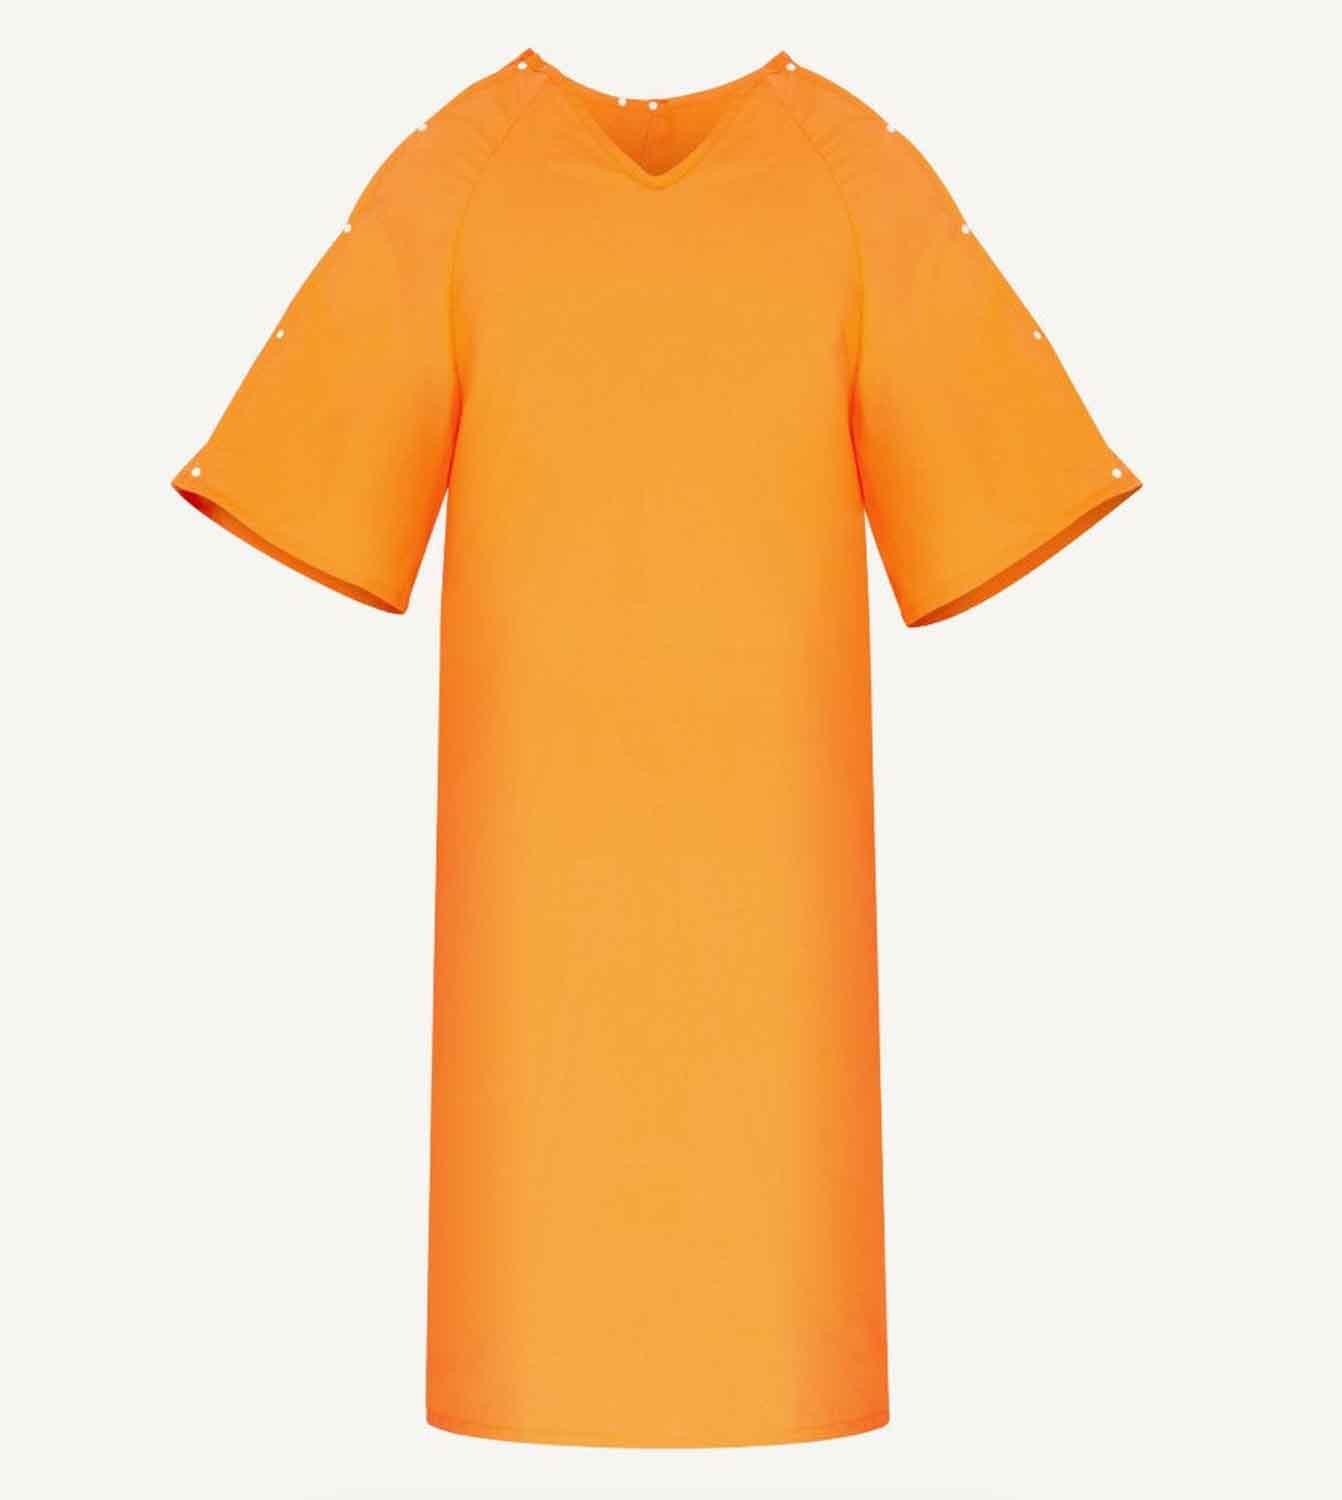 IV Gown, Snap Closure, Large, Orange, 48 pcs/pk